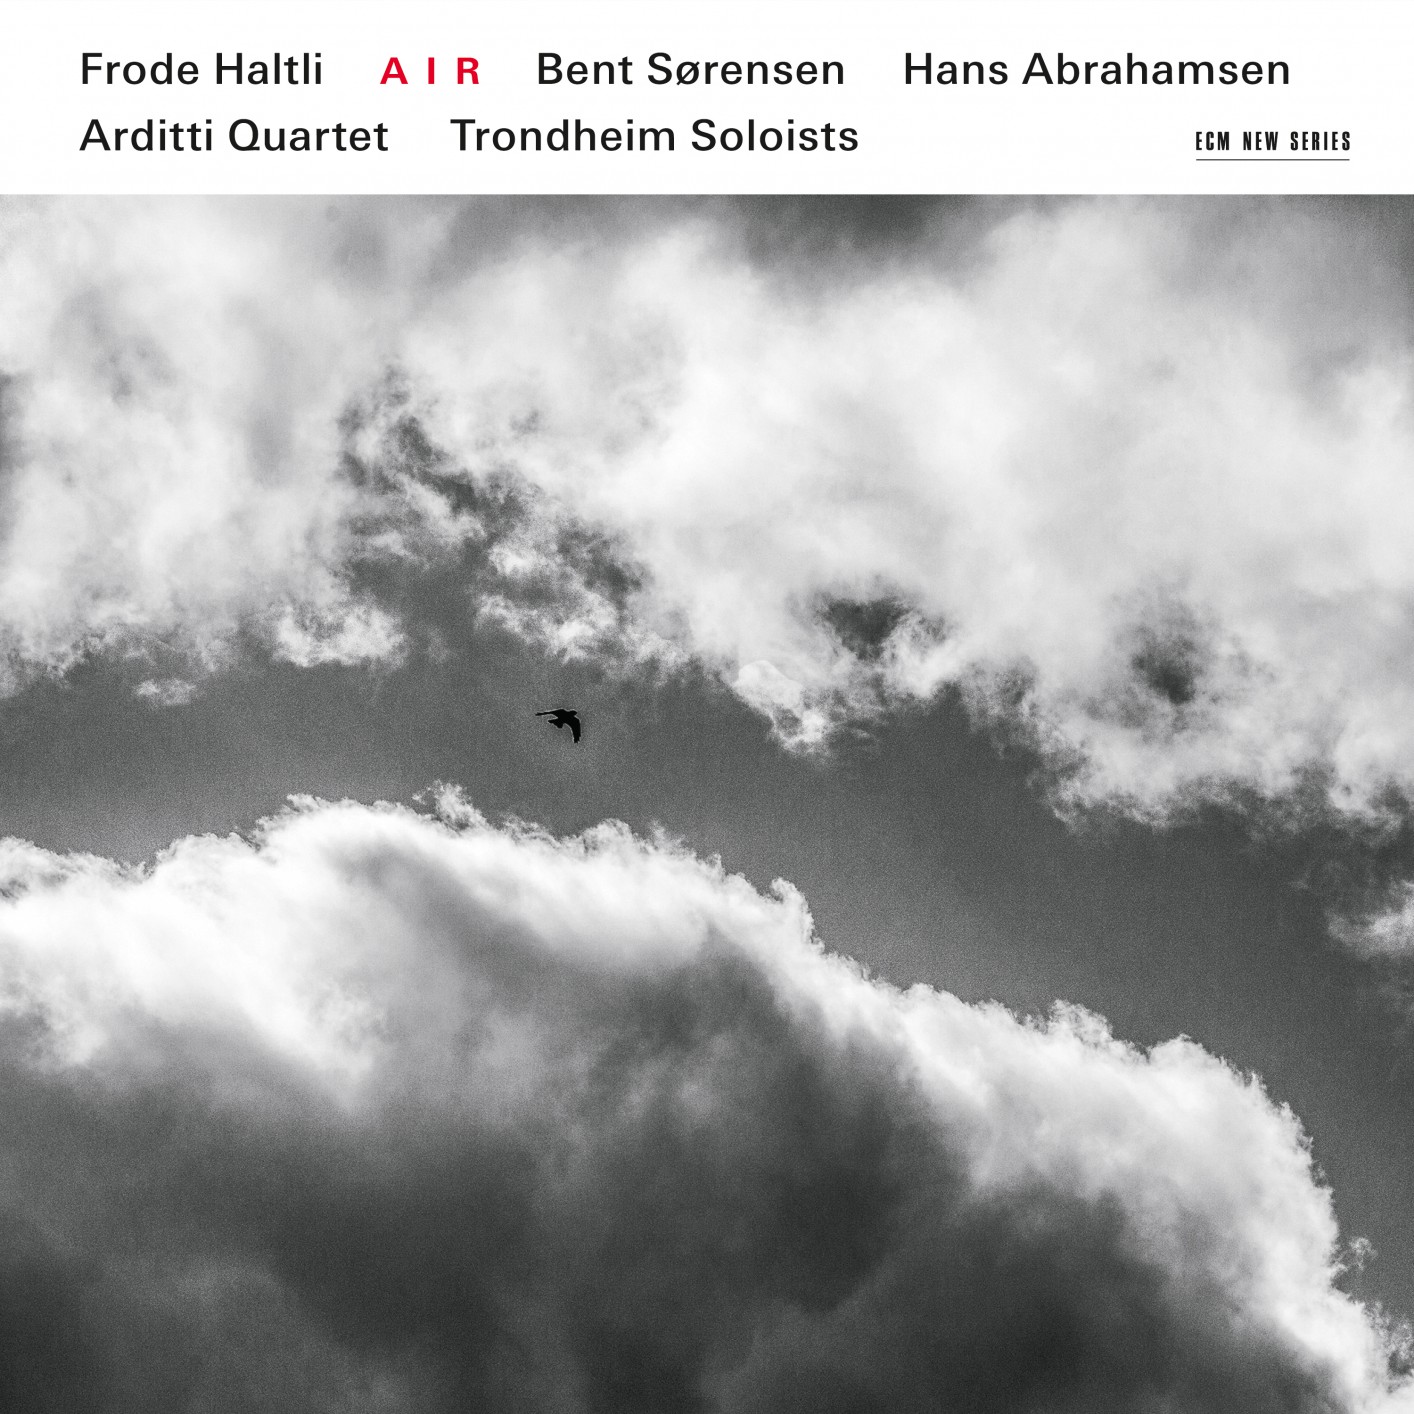 Frode Haltli, Arditti Quartet & Trondheim Soloists - Air (2016) [FLAC 24bit/96kHz]